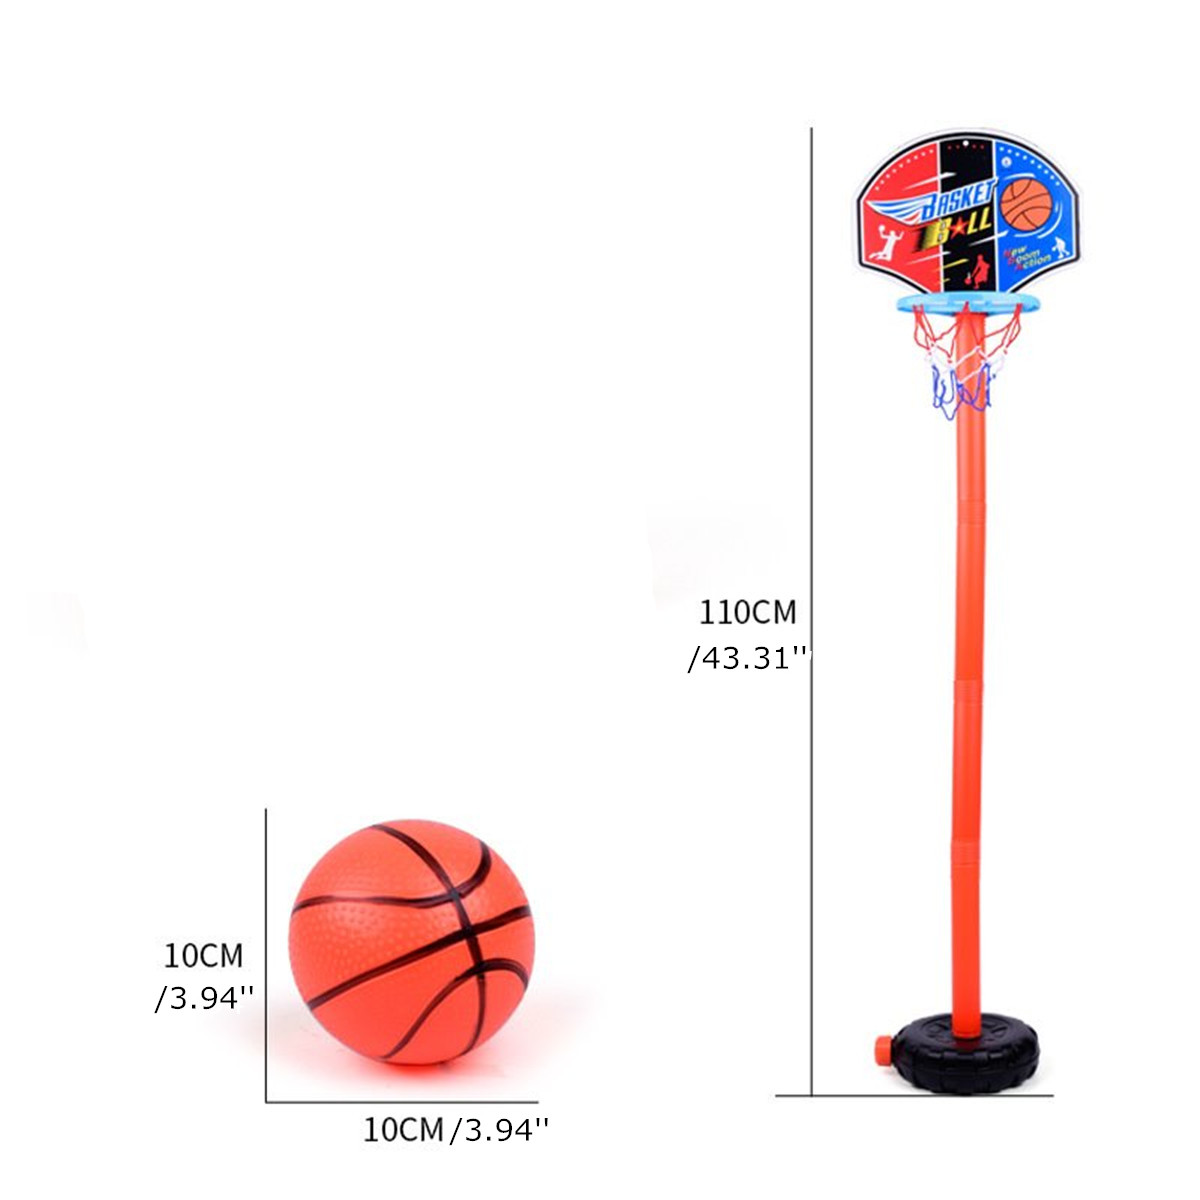 Adjustable-Mini-Basketball-Hoop-Stand-Outdoor-Indoor-Sports-Games-Kids-Toy-Gifts-1516494